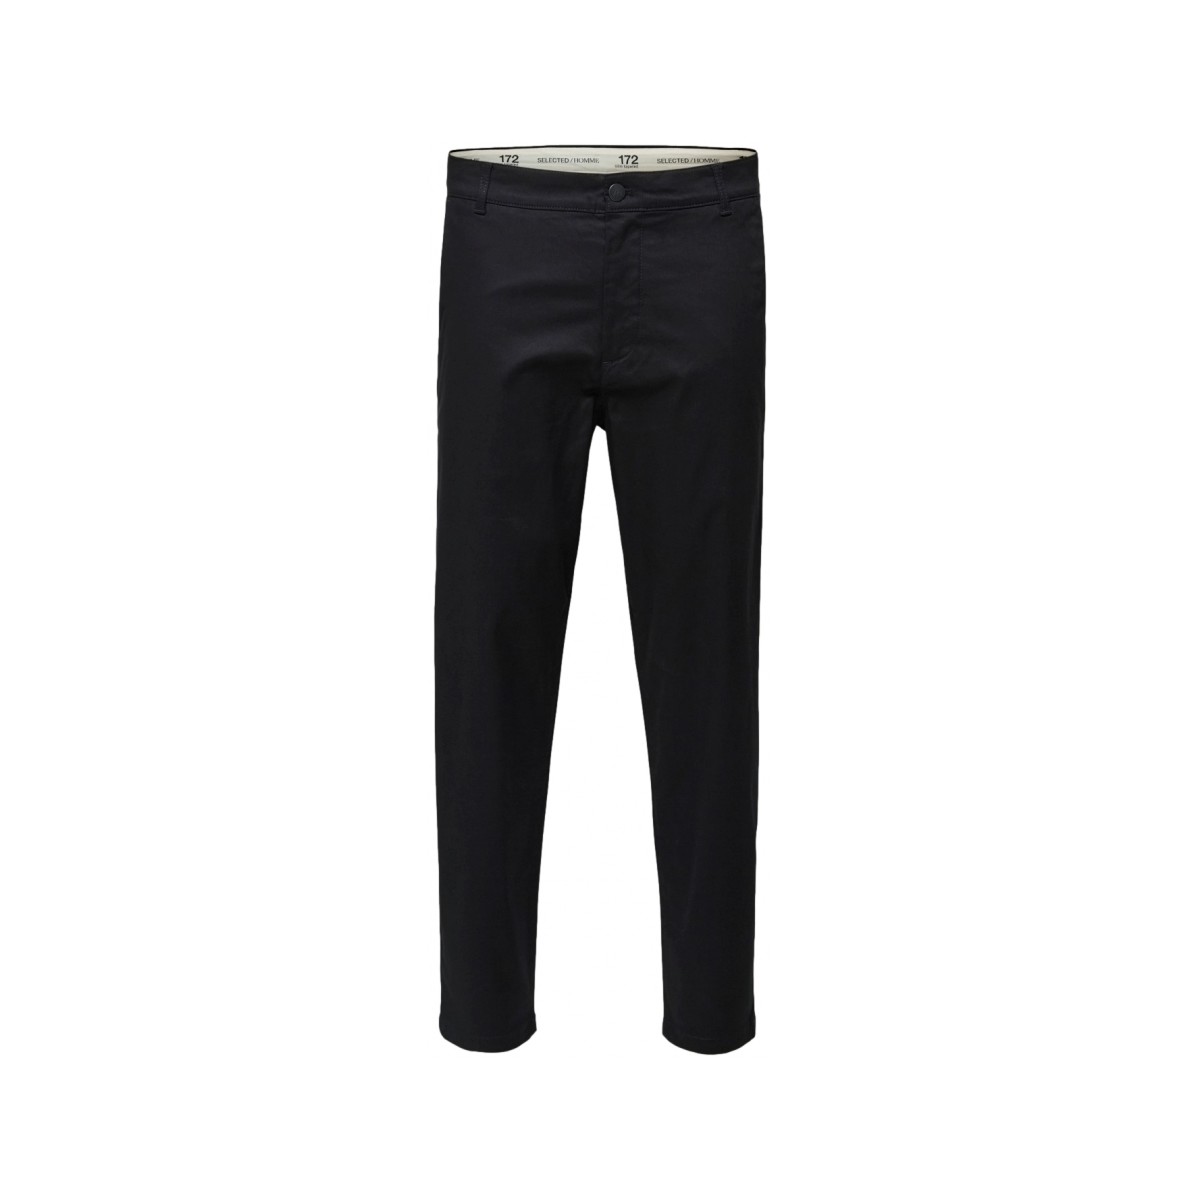 tekstylia Męskie Spodnie Selected Slim Tape Repton 172 Flex Pants - Black Czarny